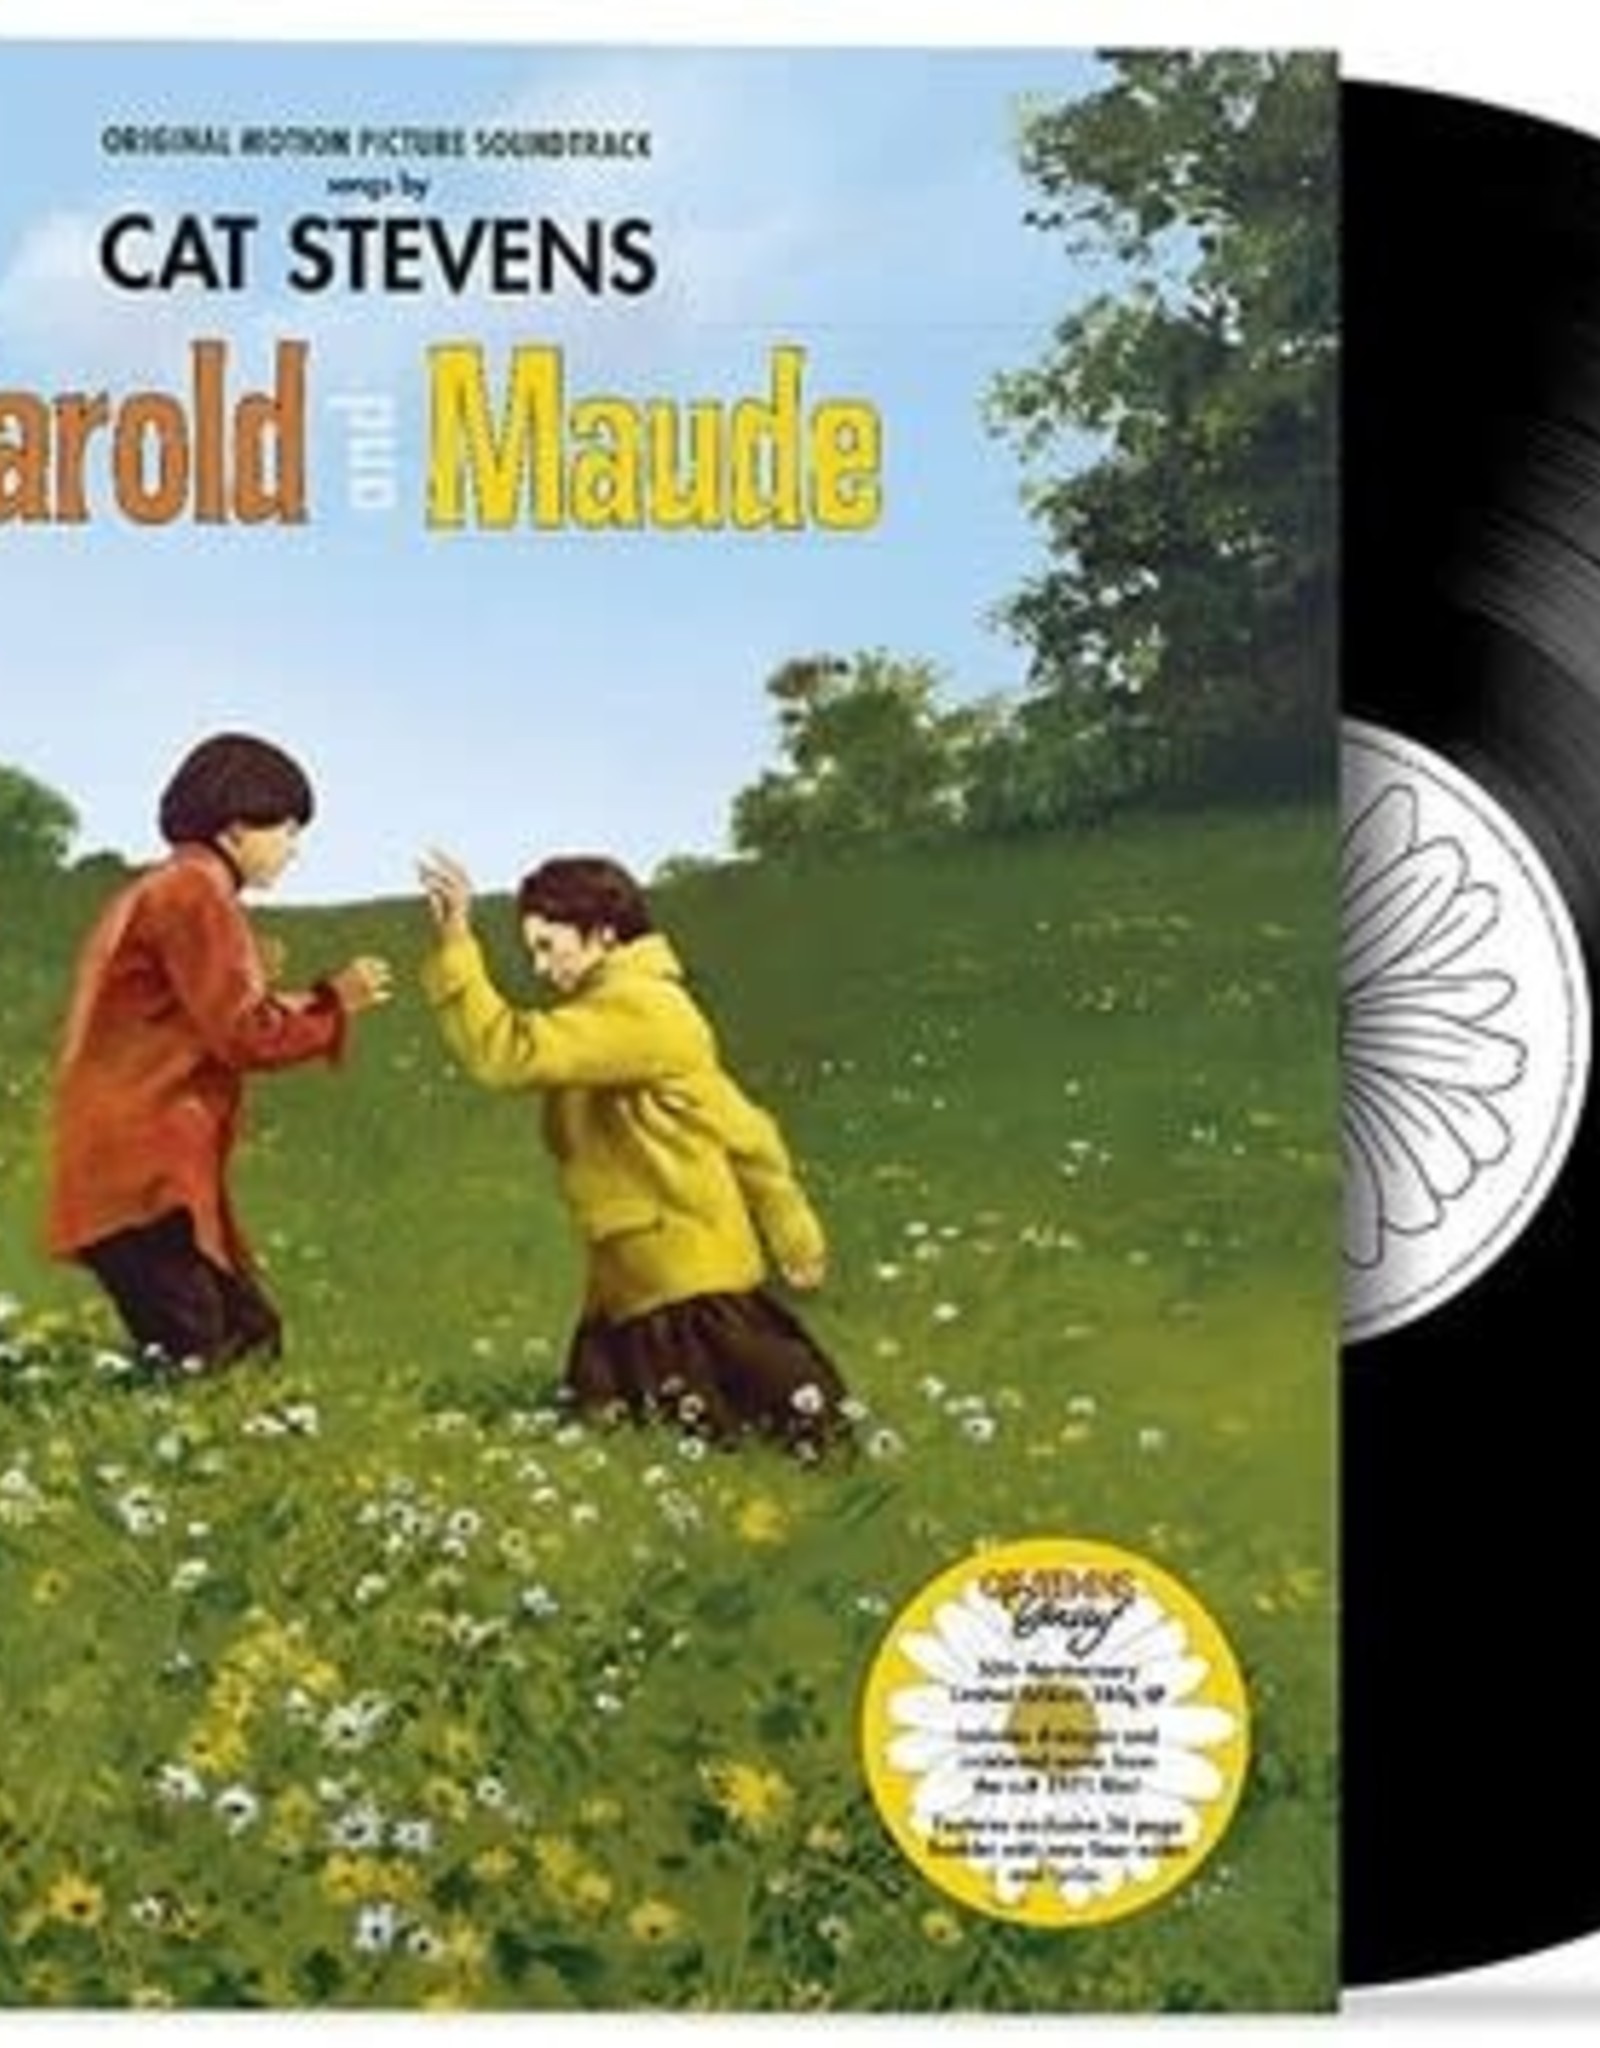 Cat Stevens - Harold & Maude 50th Anniversary Edition